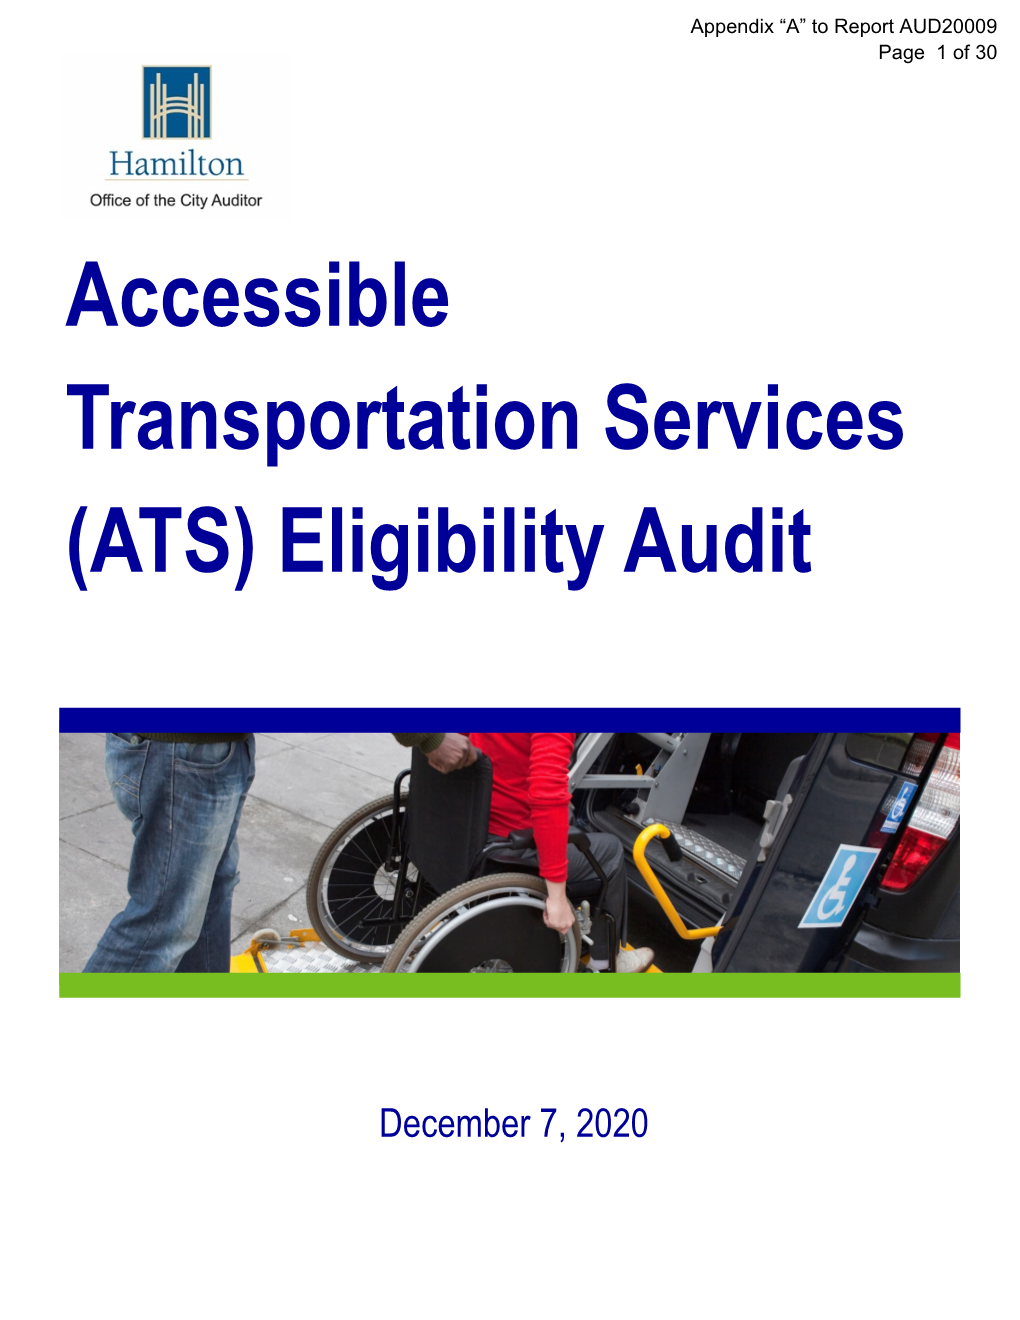 Accessible Transportation Services (ATS) Eligibility Audit